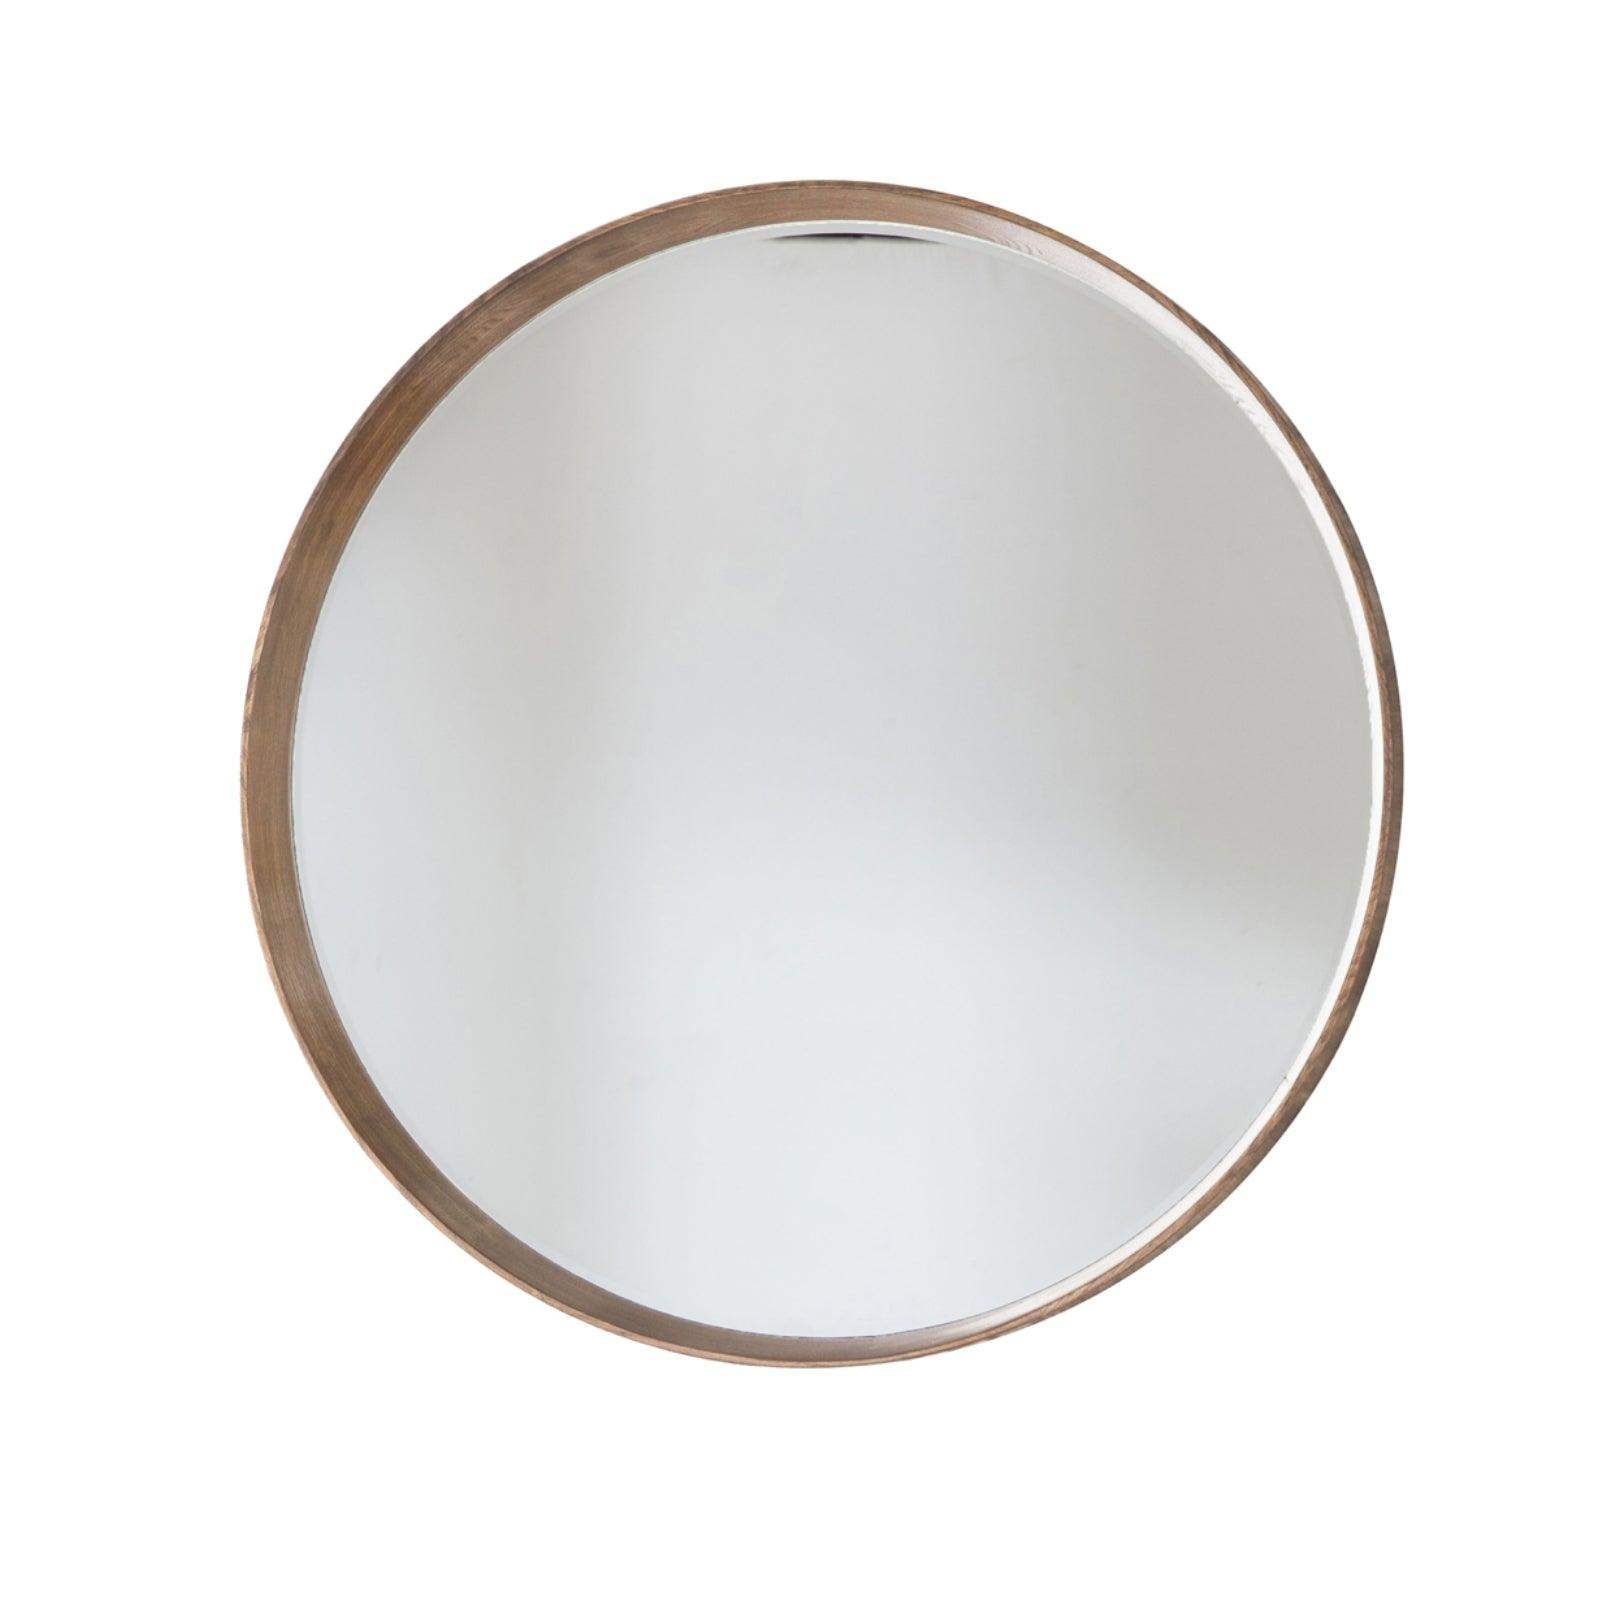 Oak Framed Round Mirror - The Farthing